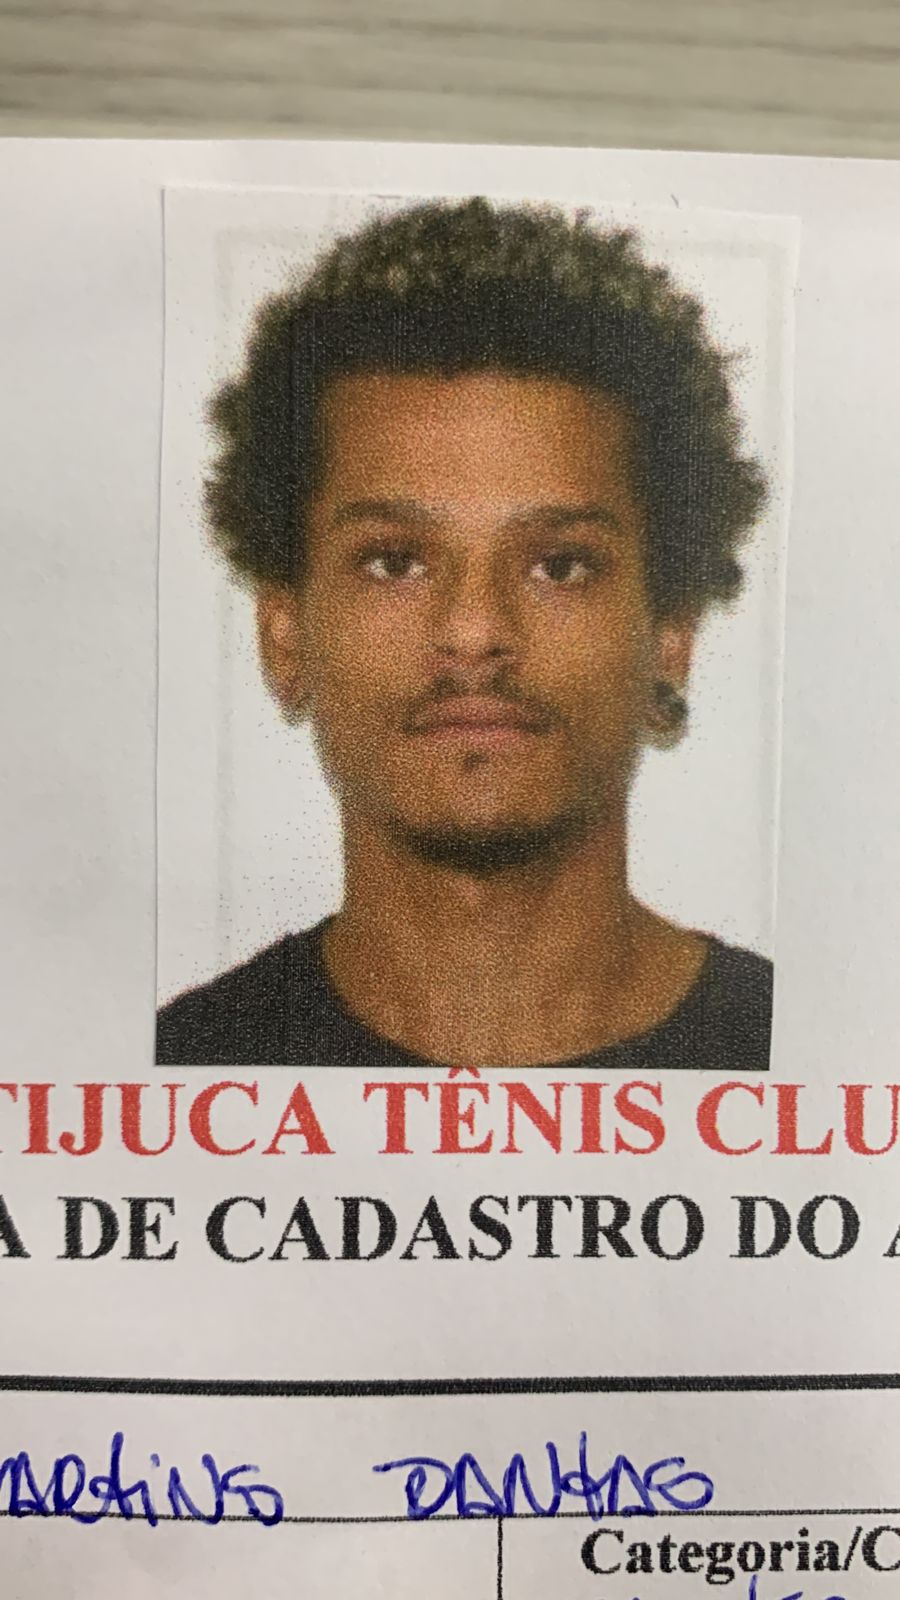 Andre Veloso - Técnico de Natação - Tijuca Tenis Clube